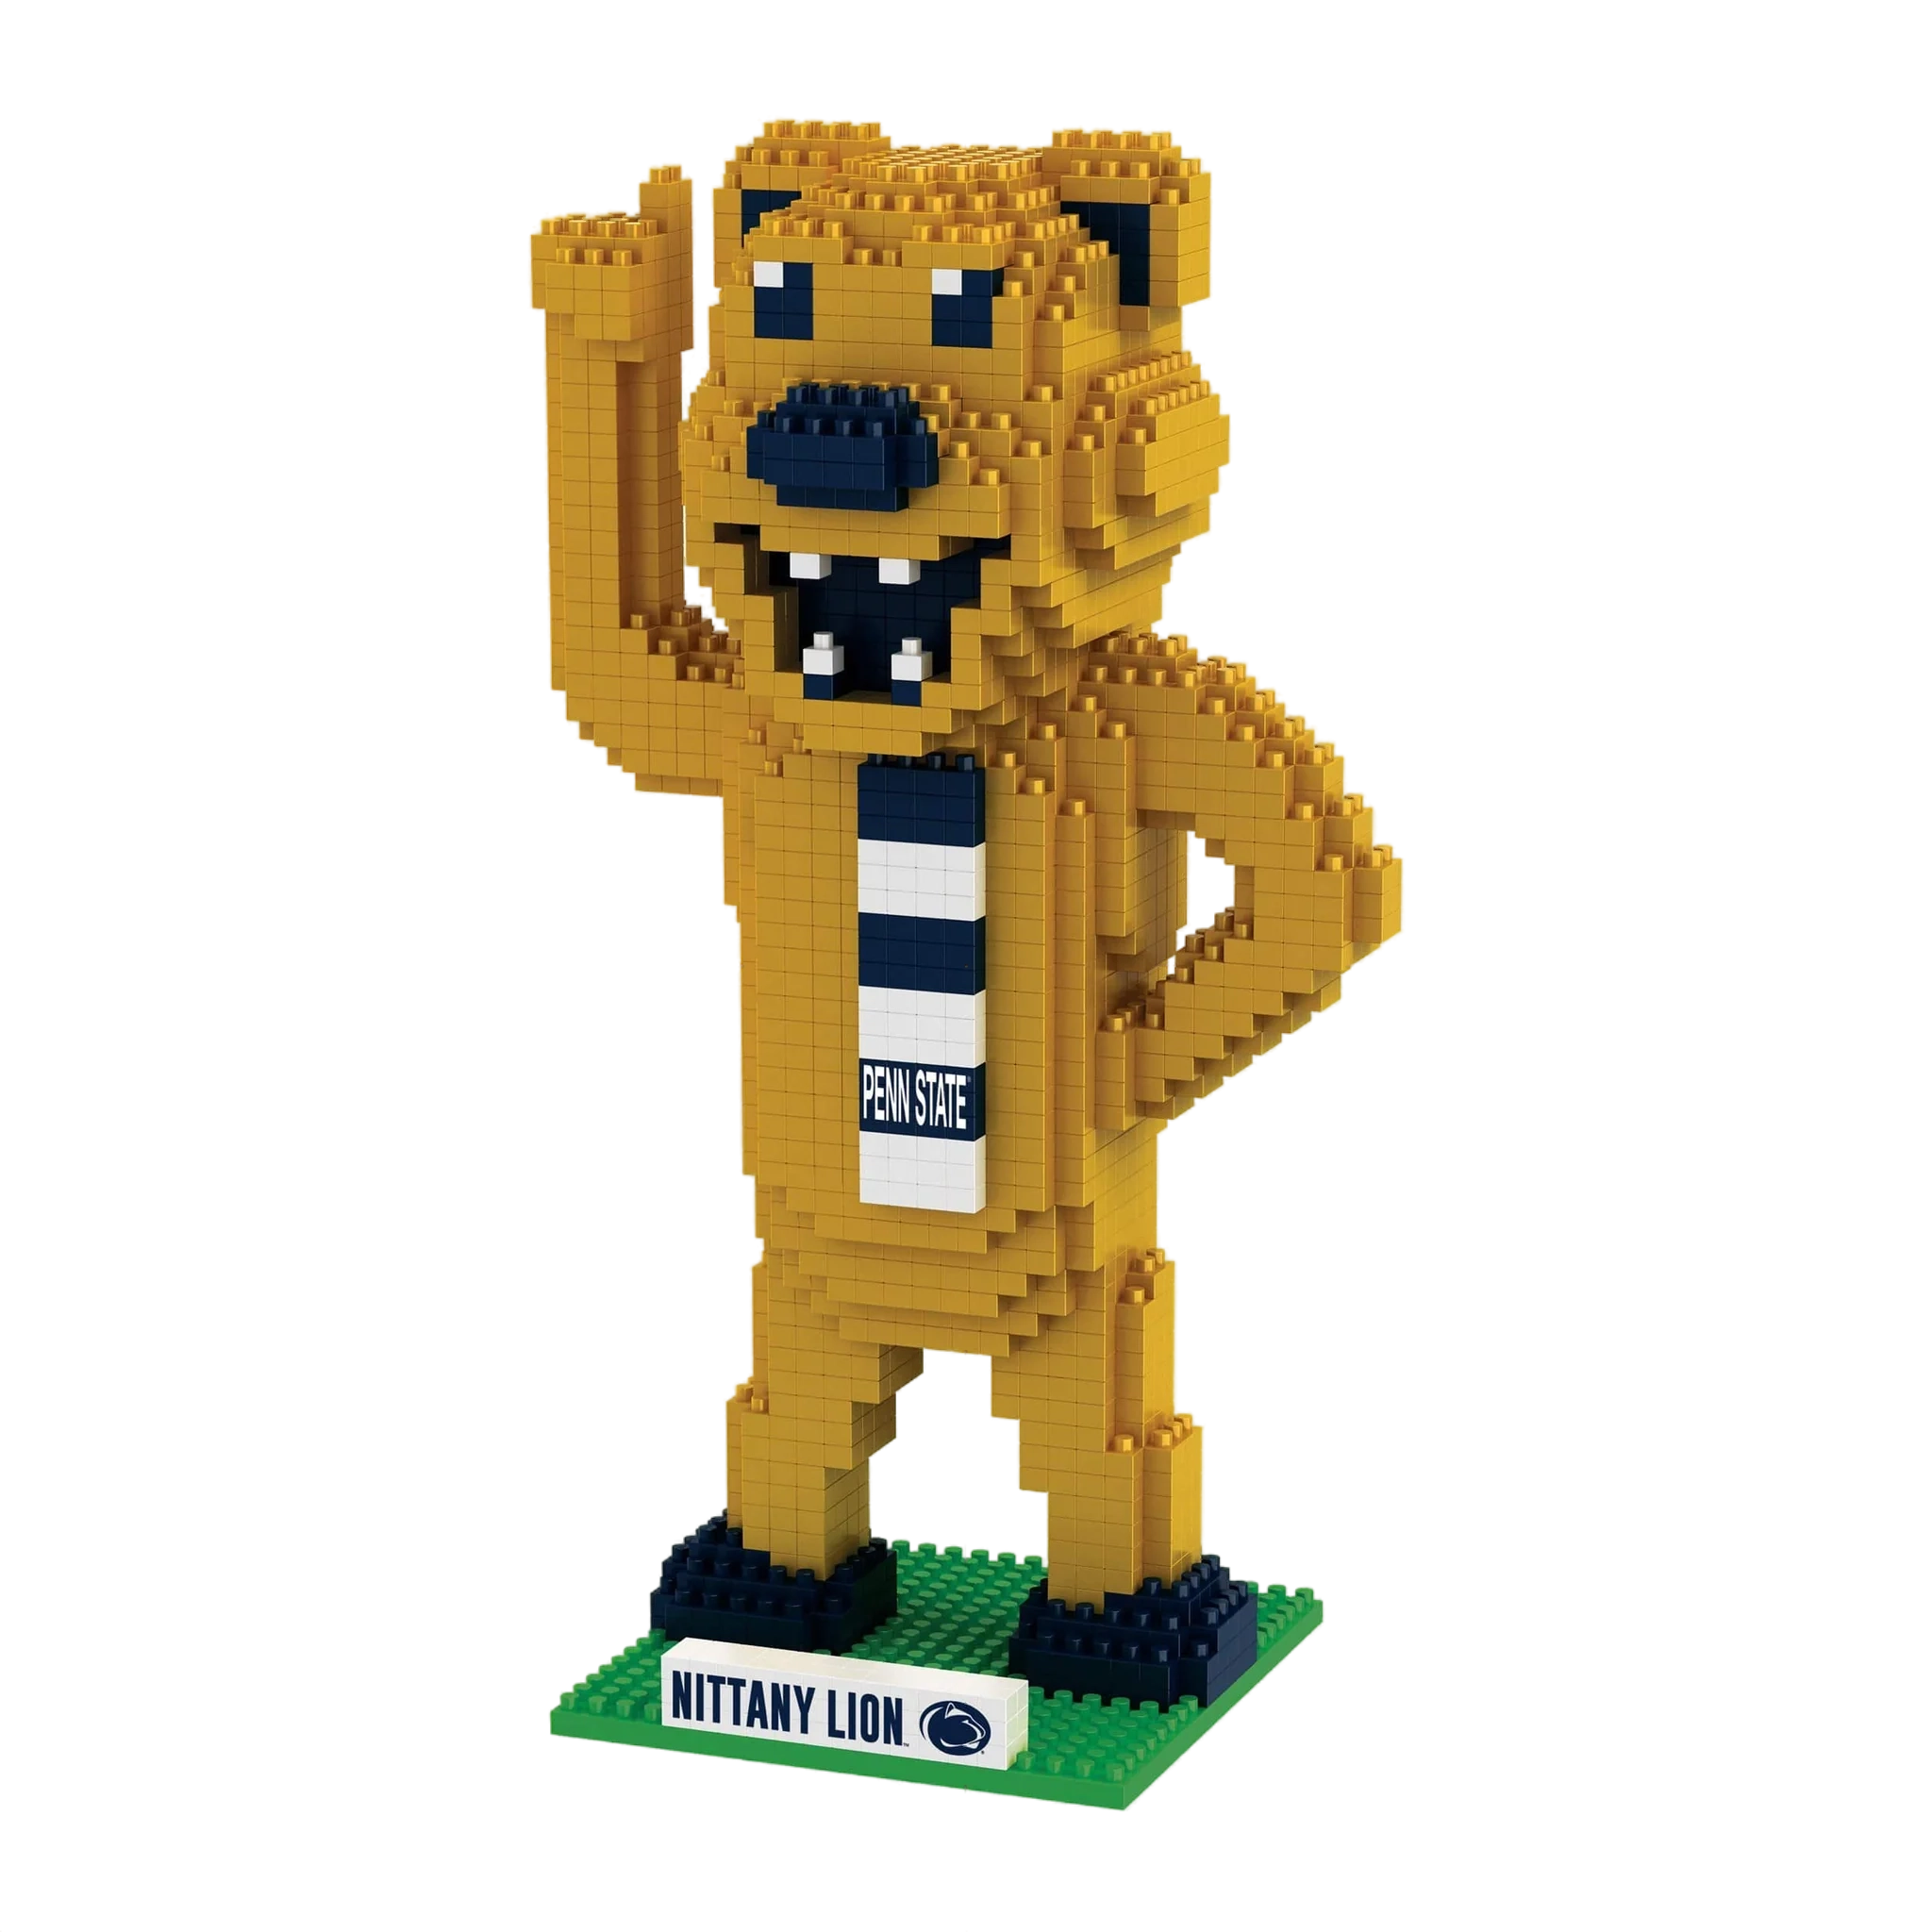 Pennsylvania State University mascot